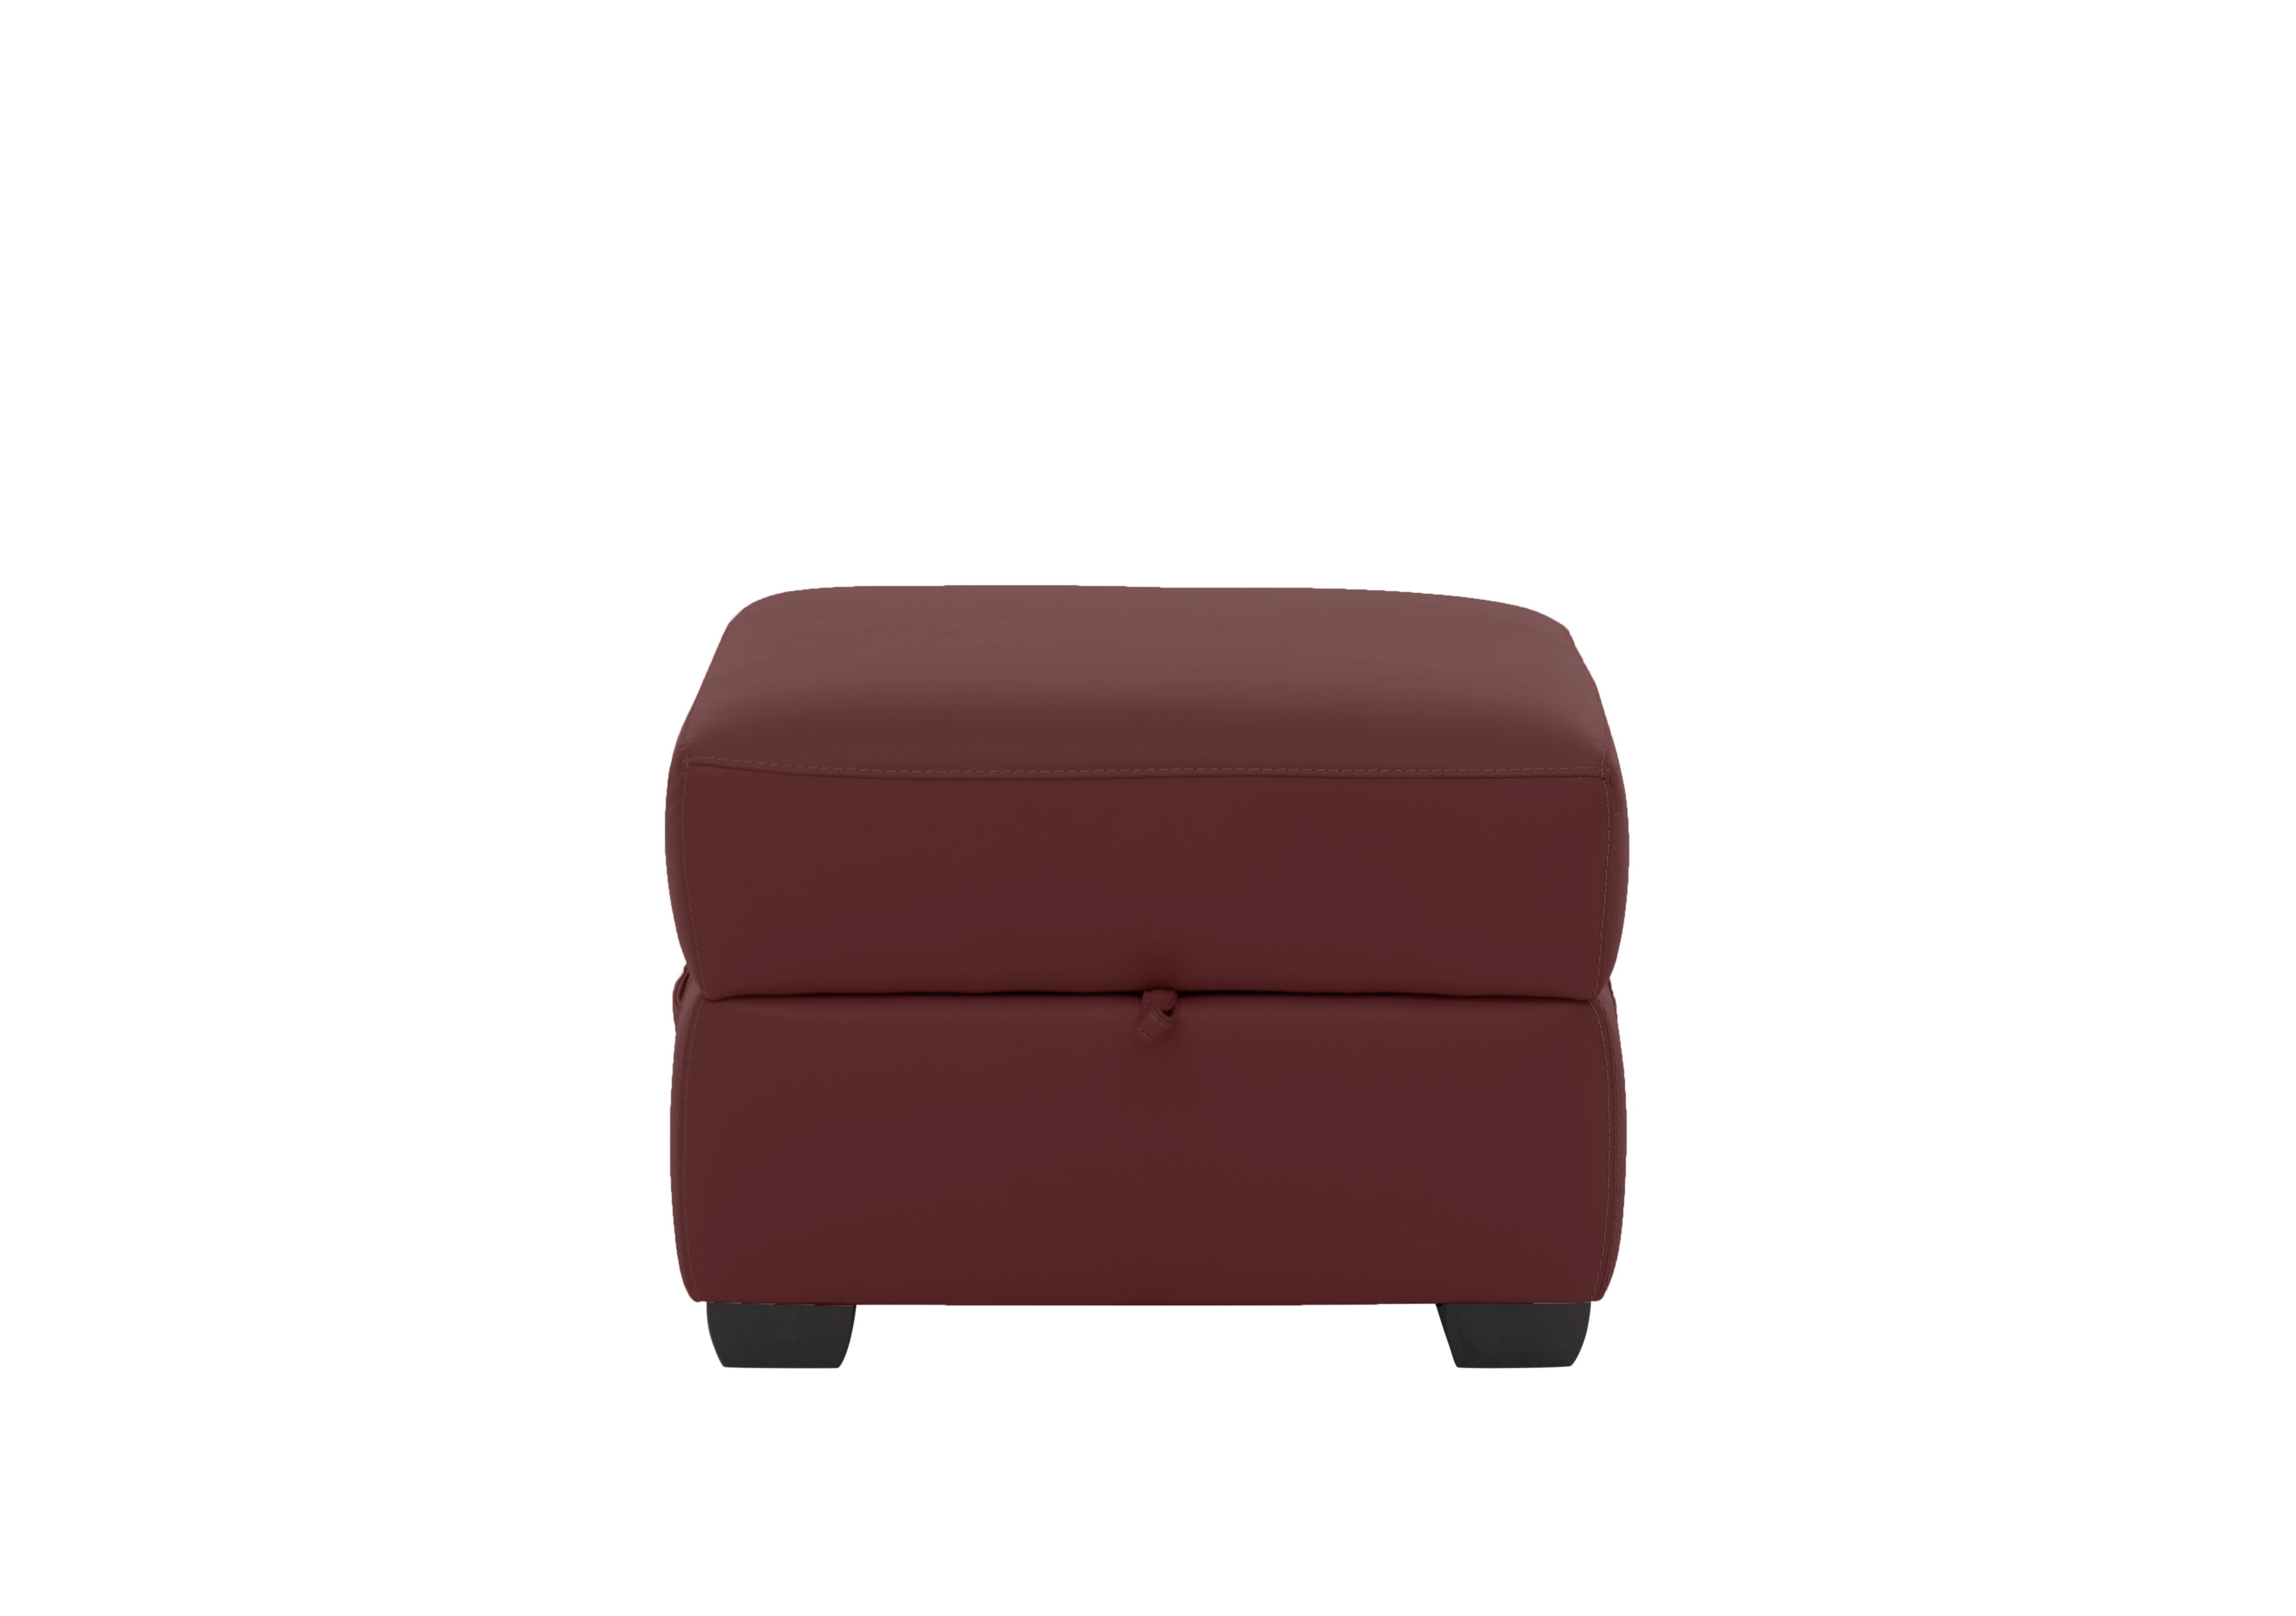 Missouri Leather Storage Footstool in Bv-035c Deep Red on Furniture Village